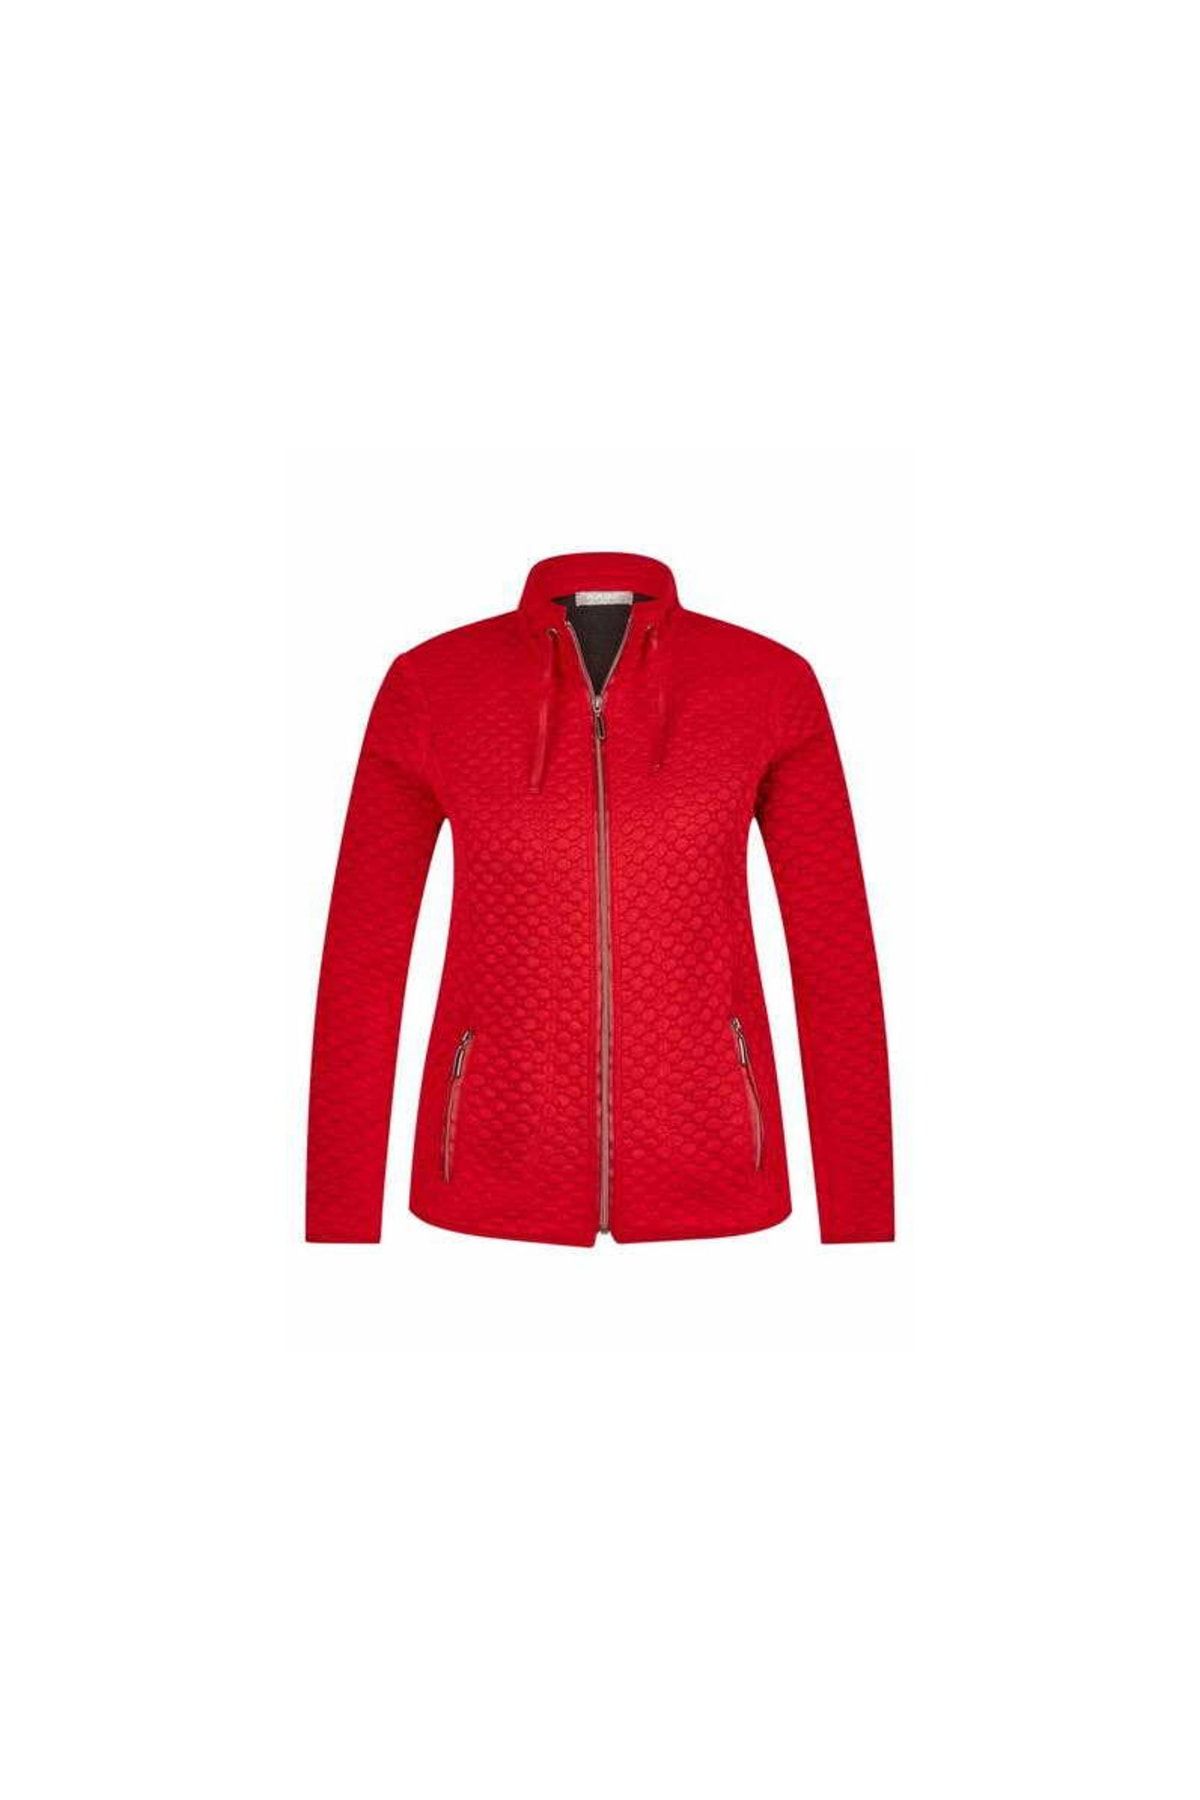 Rabe 1920 Jacket - Red Regular Trendyol fit - 